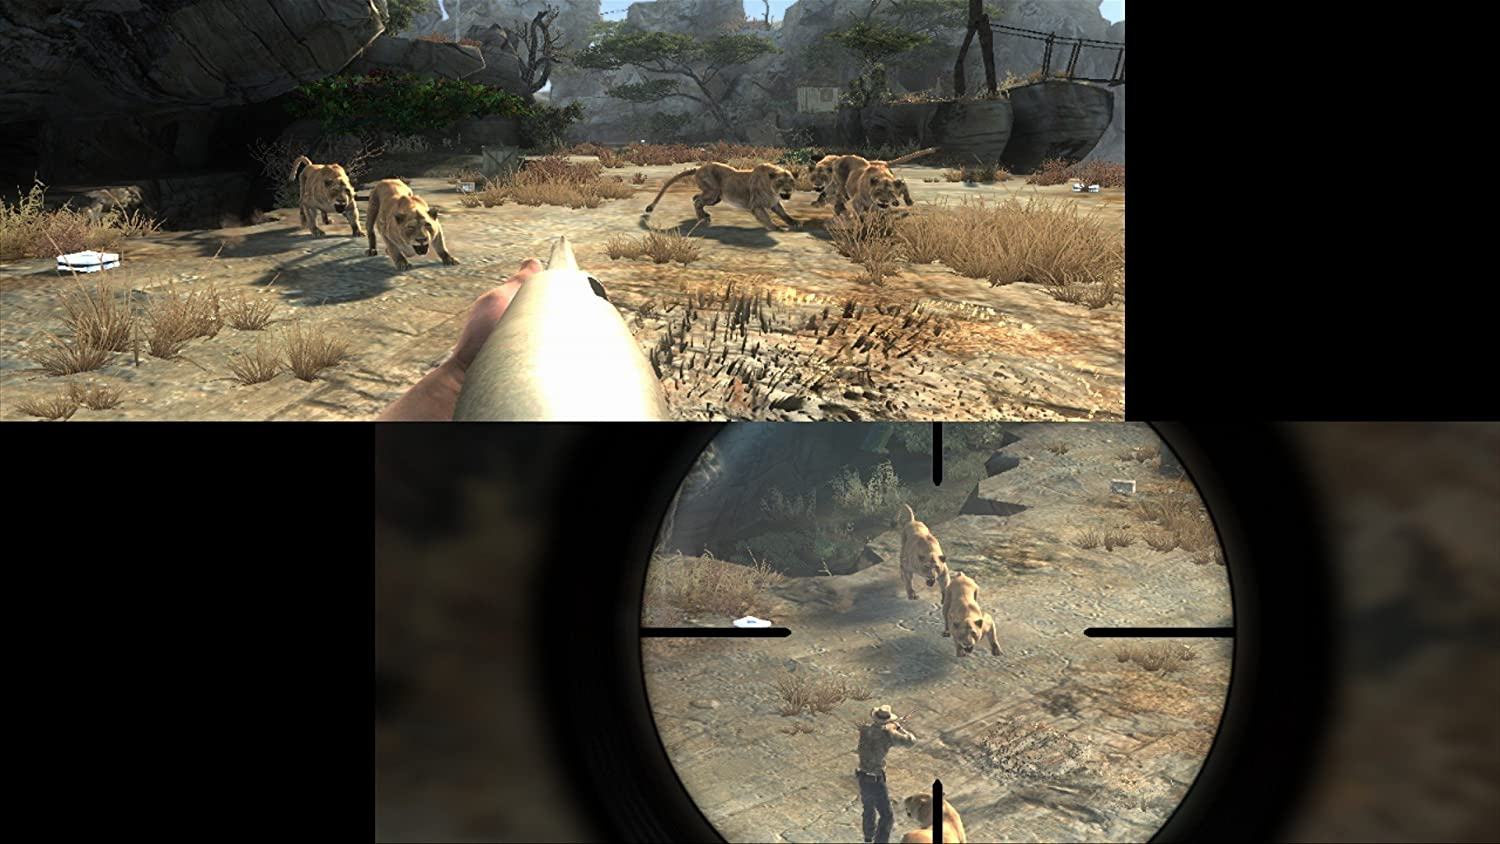 Cabela\'s Dangerous Hunts inkl. Shot 2013 - Top [PlayStation Fearmaster 3